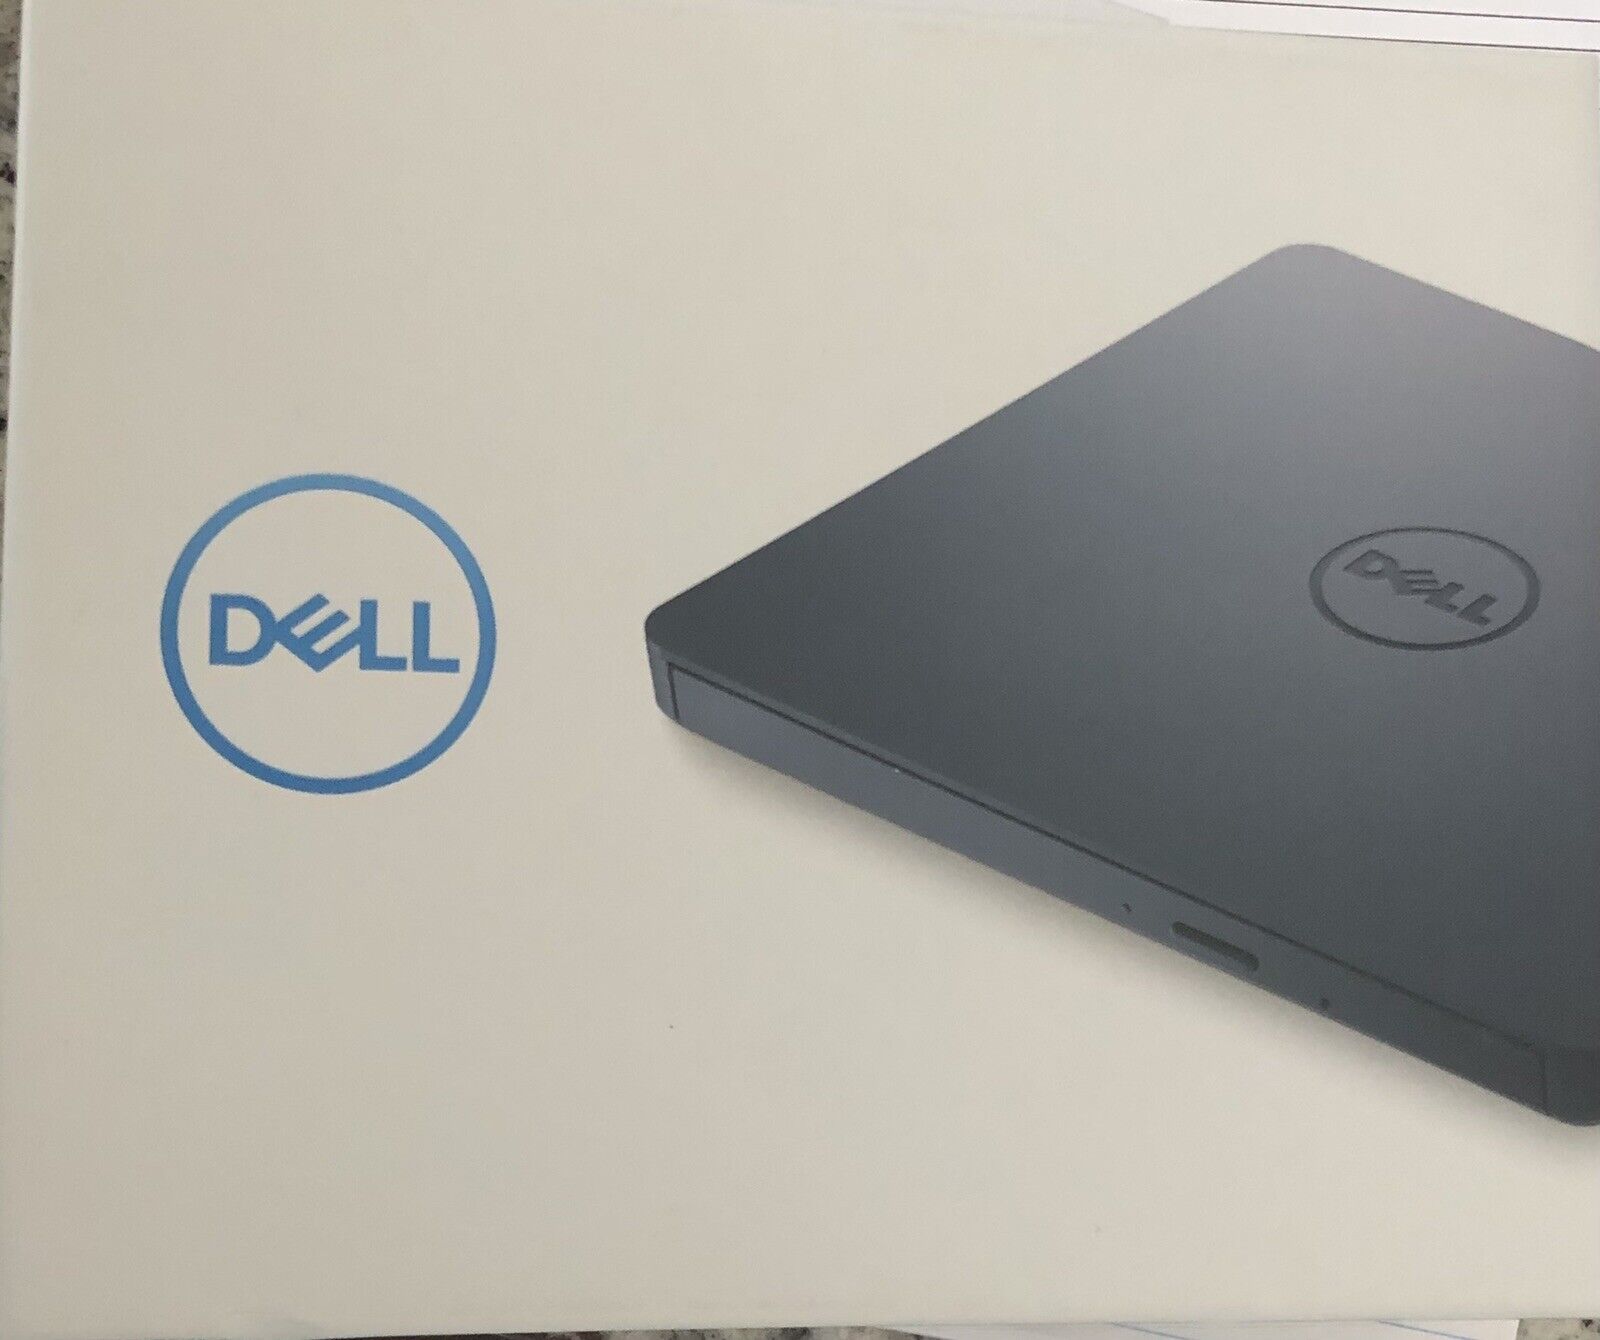 Brand New Factory Sealed External Dell USB Slim DVD±RW drive - DW316 